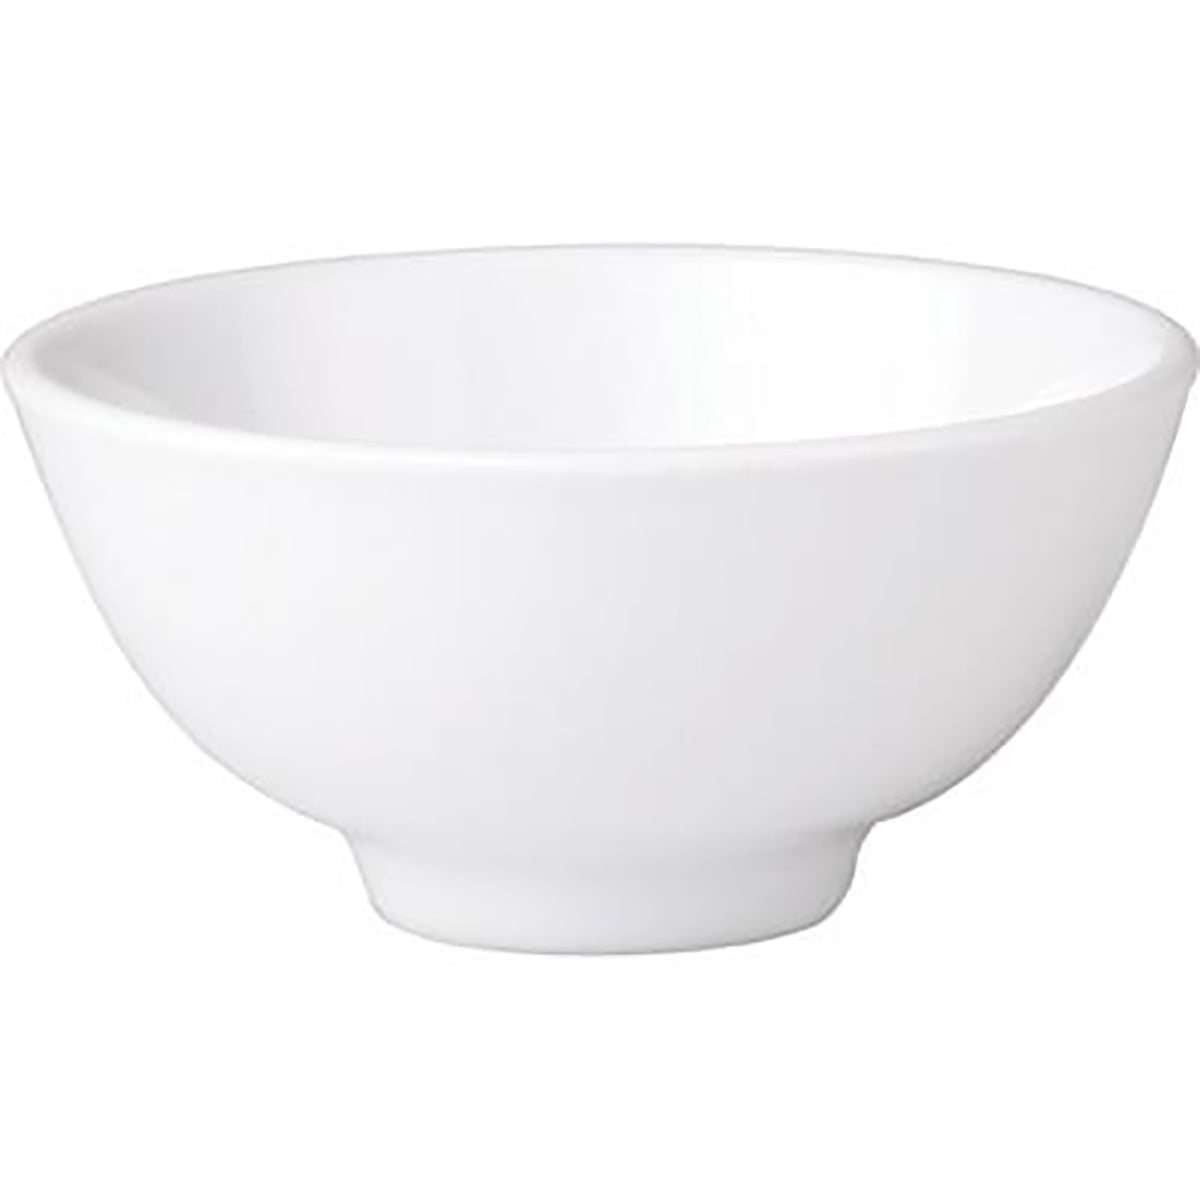 94131 Royal Porcelain Chelsea Rice/Noodle Bowl 100mm (4017) Tomkin Australia Hospitality Supplies